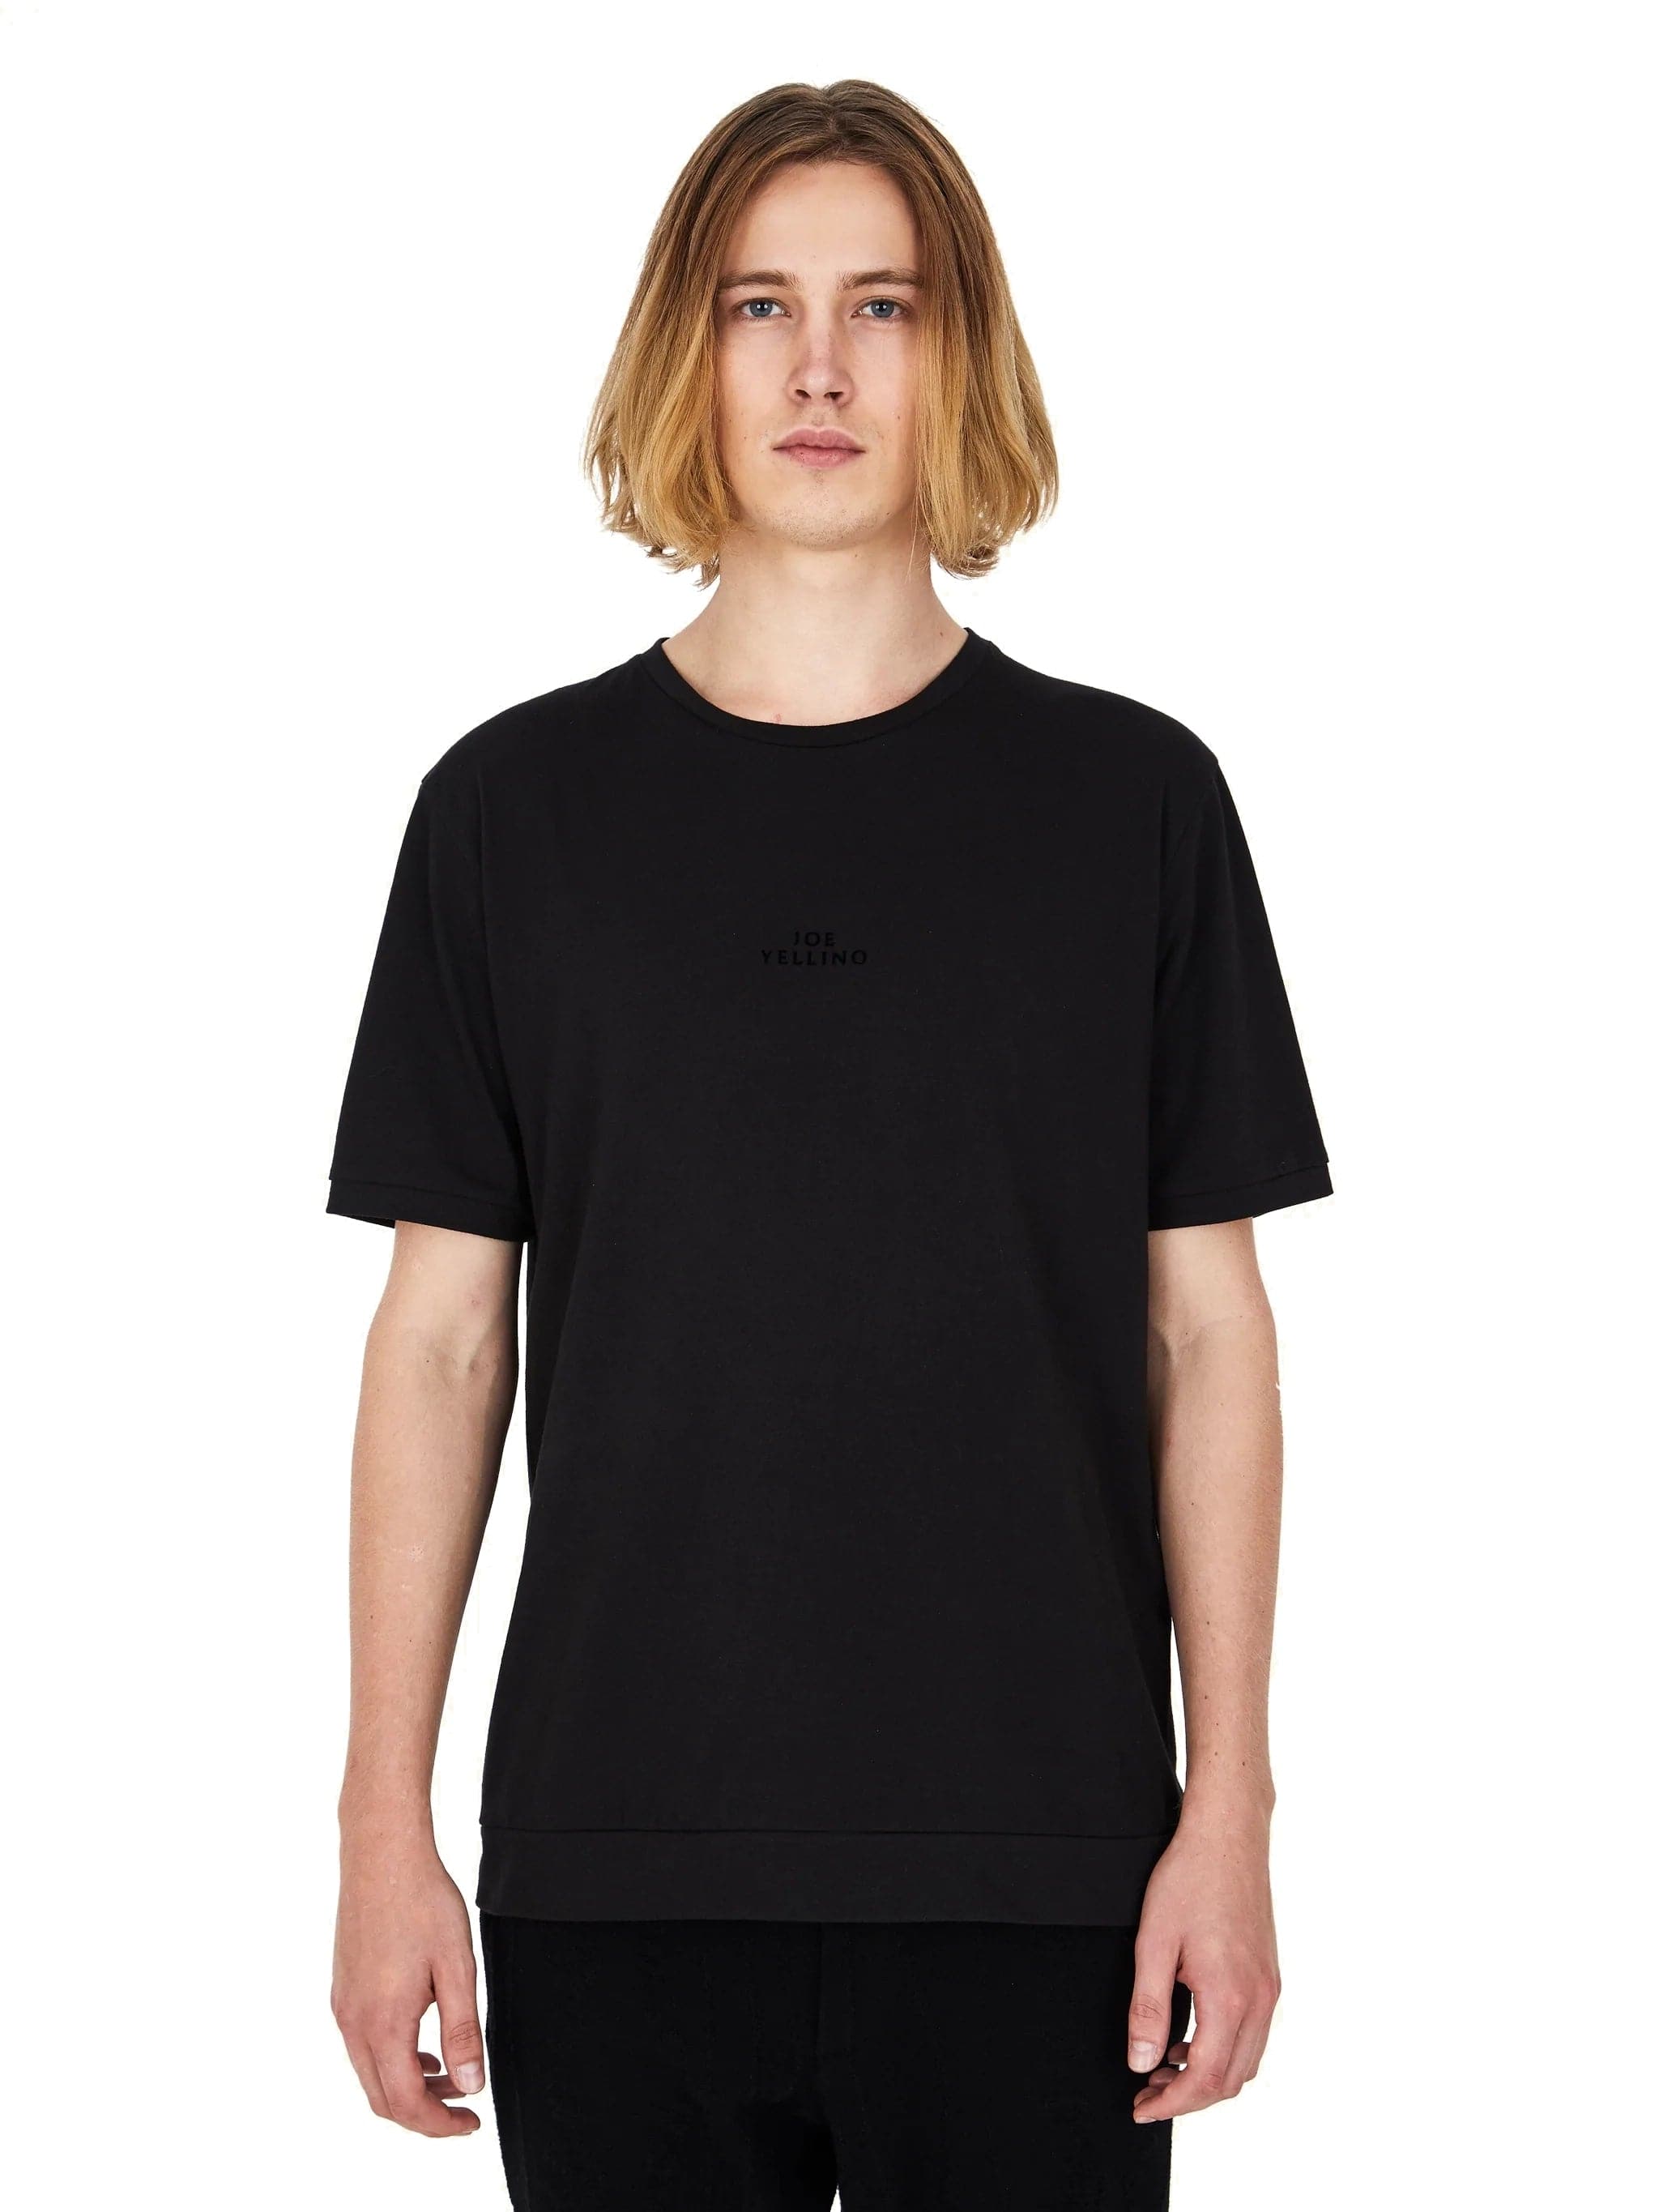 Black on black logo T-Shirt